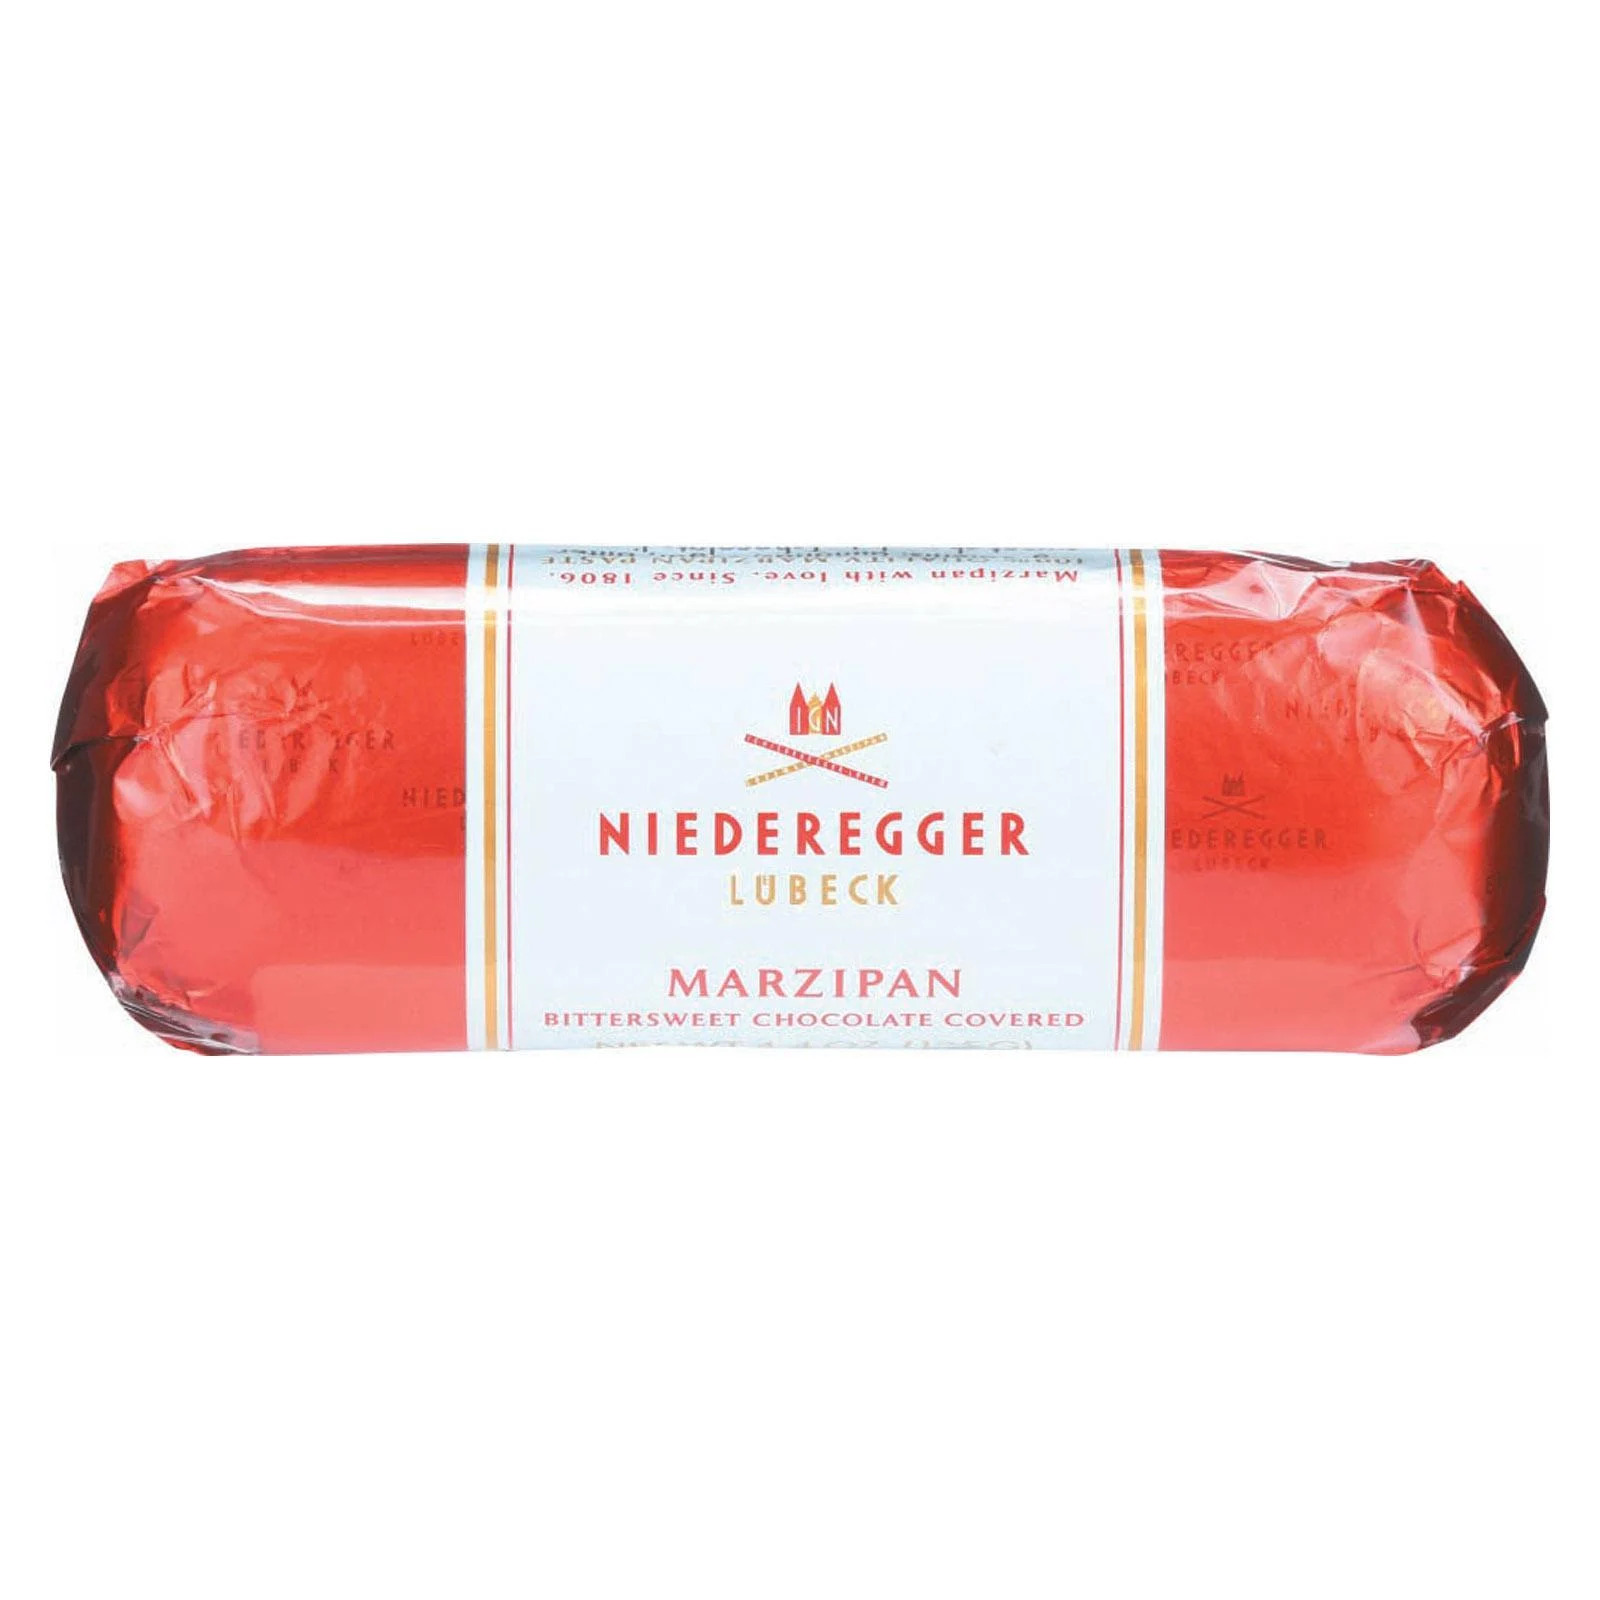 Niederegger Chocolate Covered Marzipan (75g)